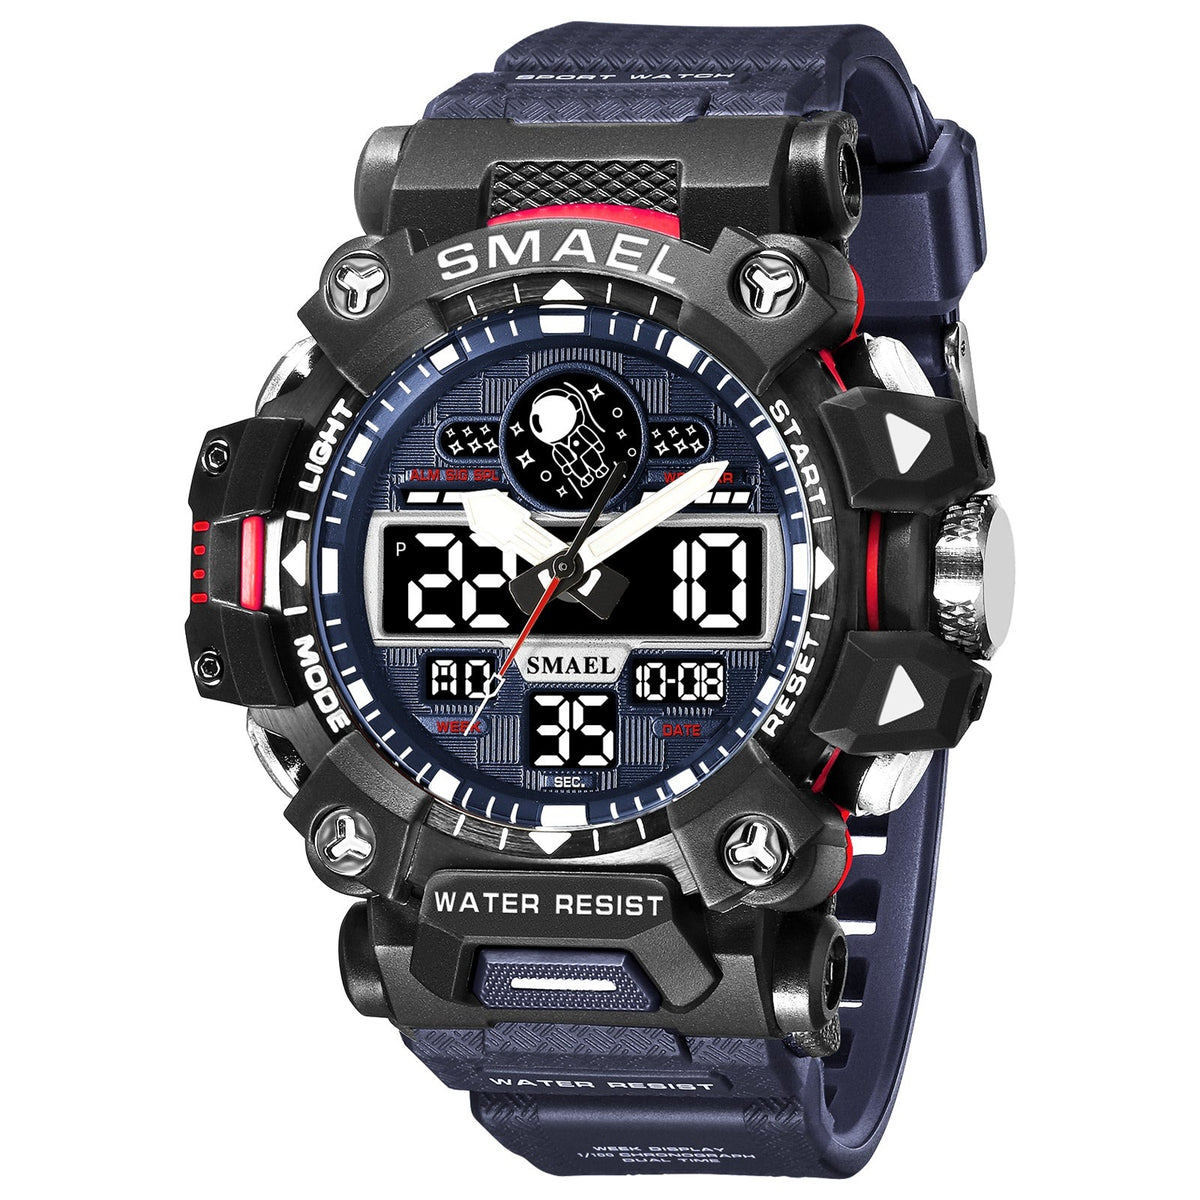 Relógio de Pulso Esportivo Masculino SMAEL com Duplo Display - Kaype Store